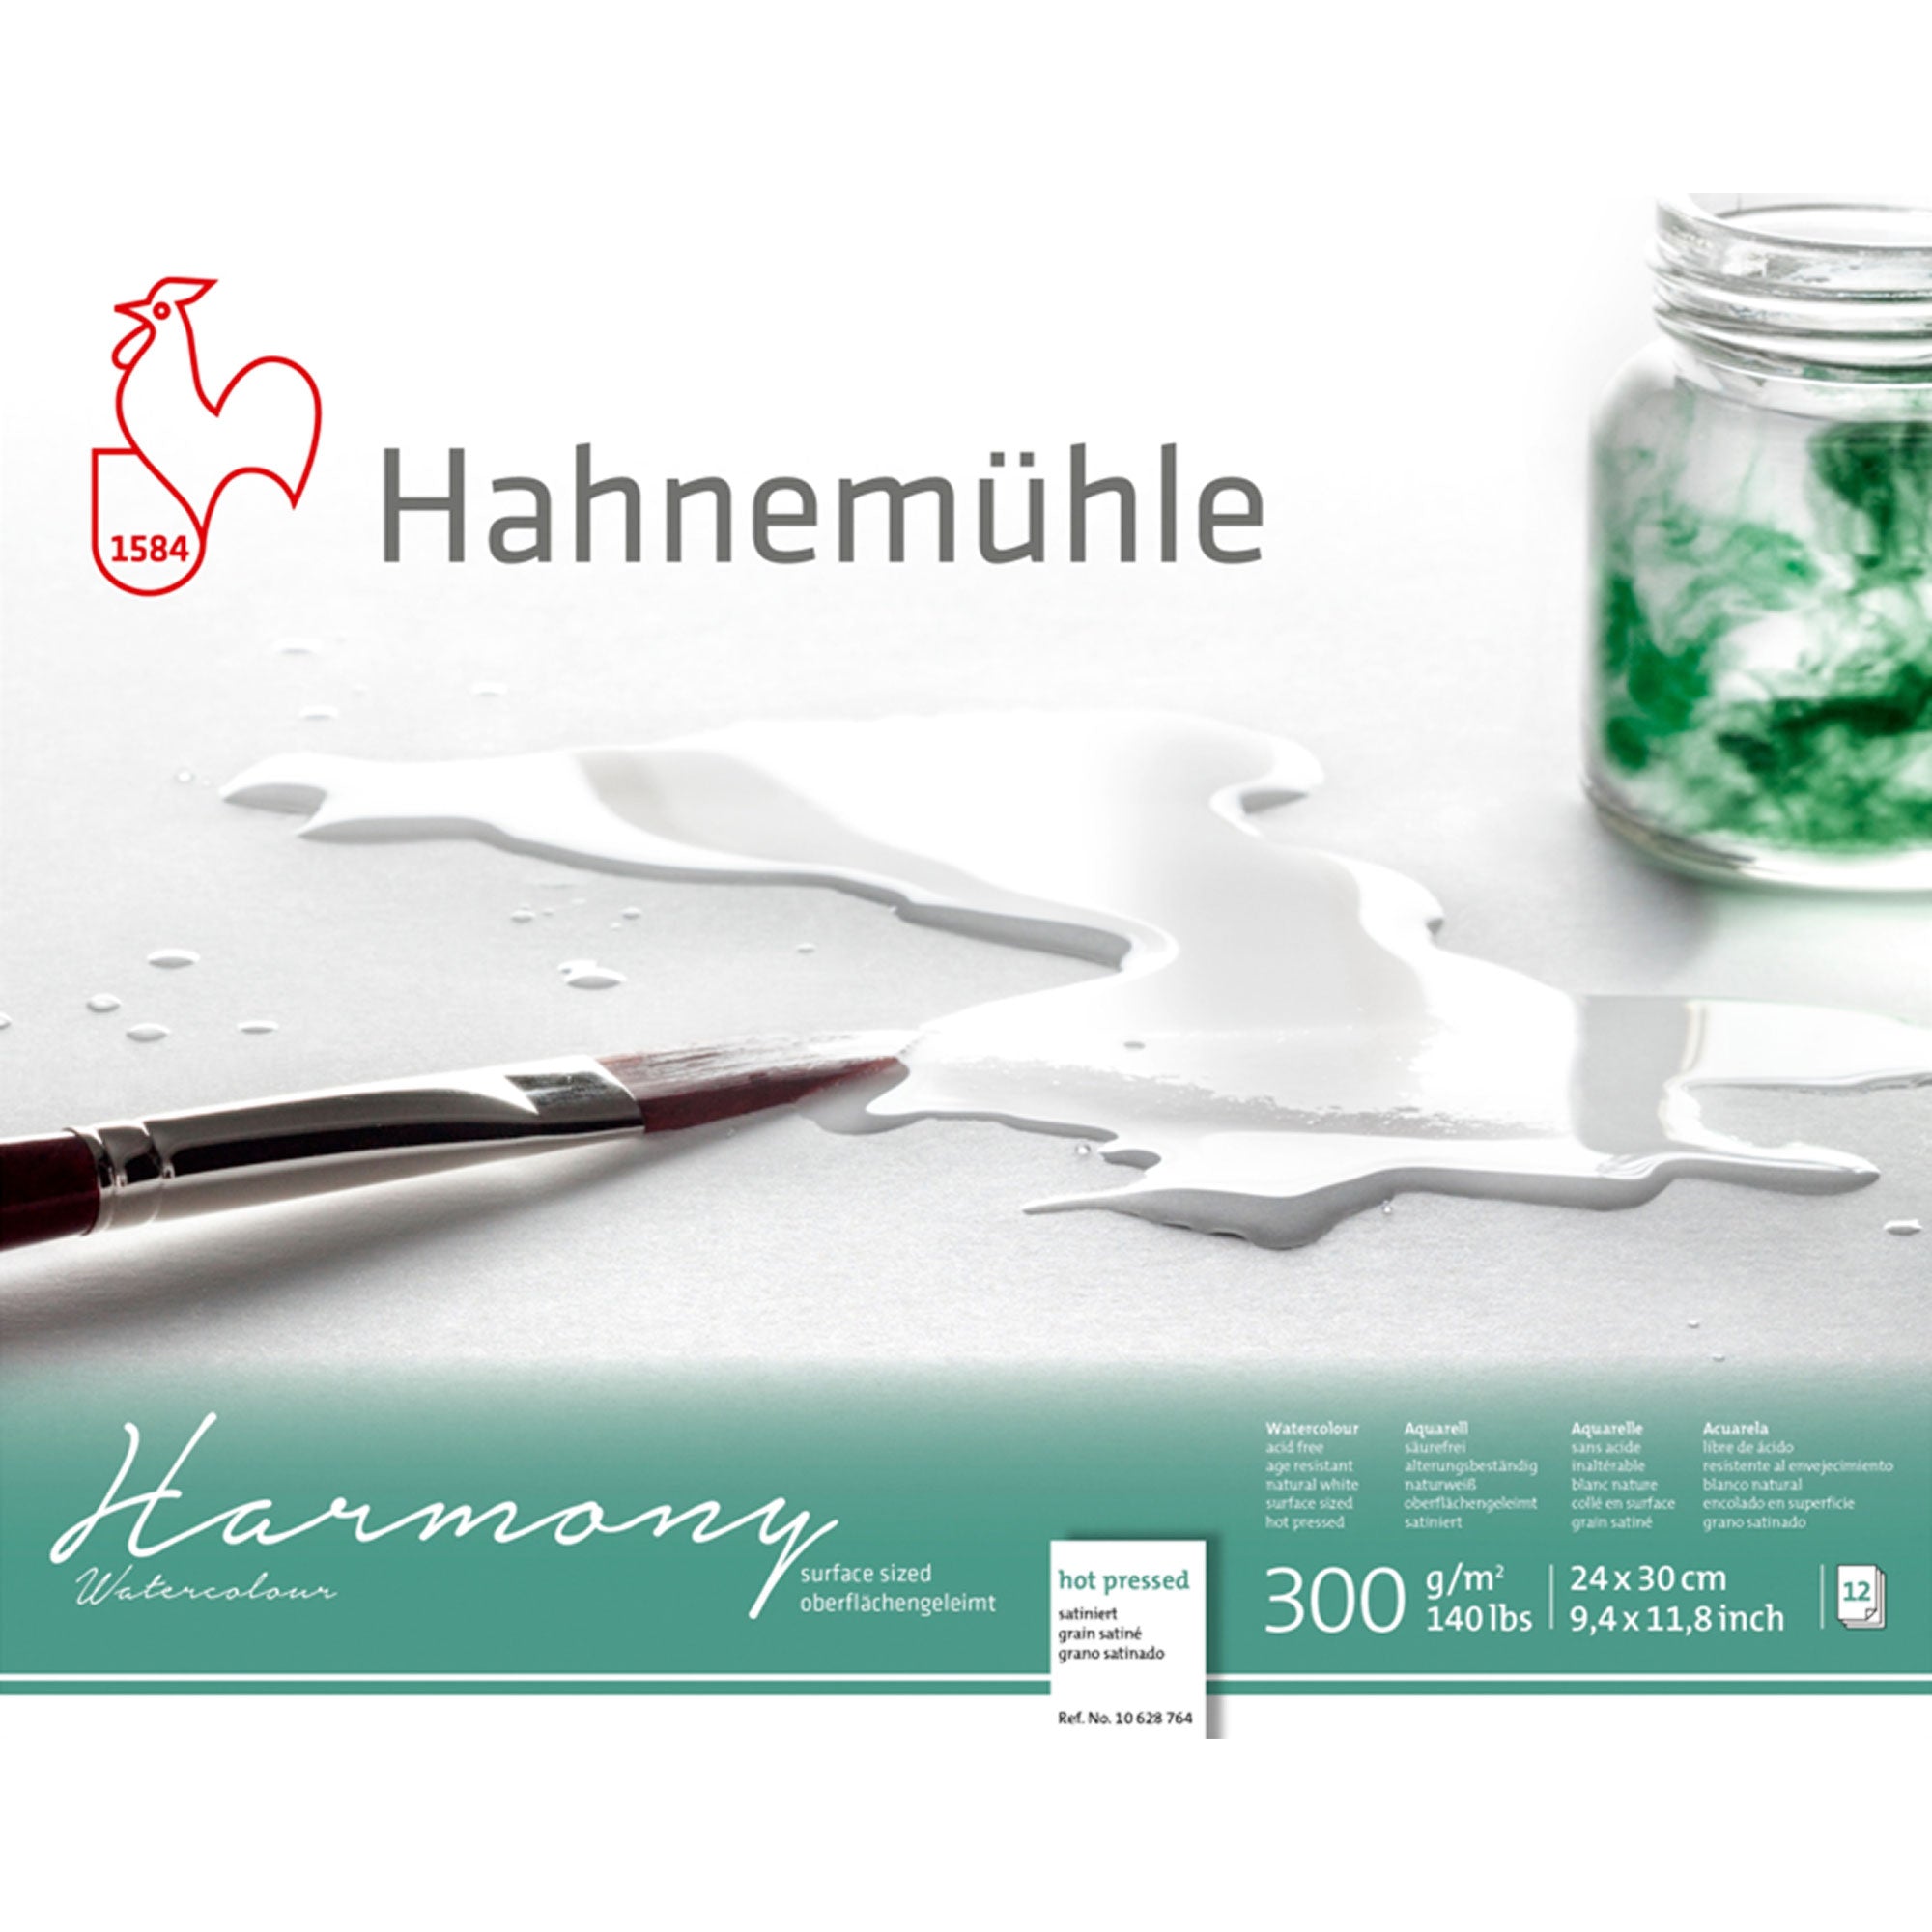 Hahnemühle 'Harmony' Watercolour Blocks - HOT PRESSED - 300gsm